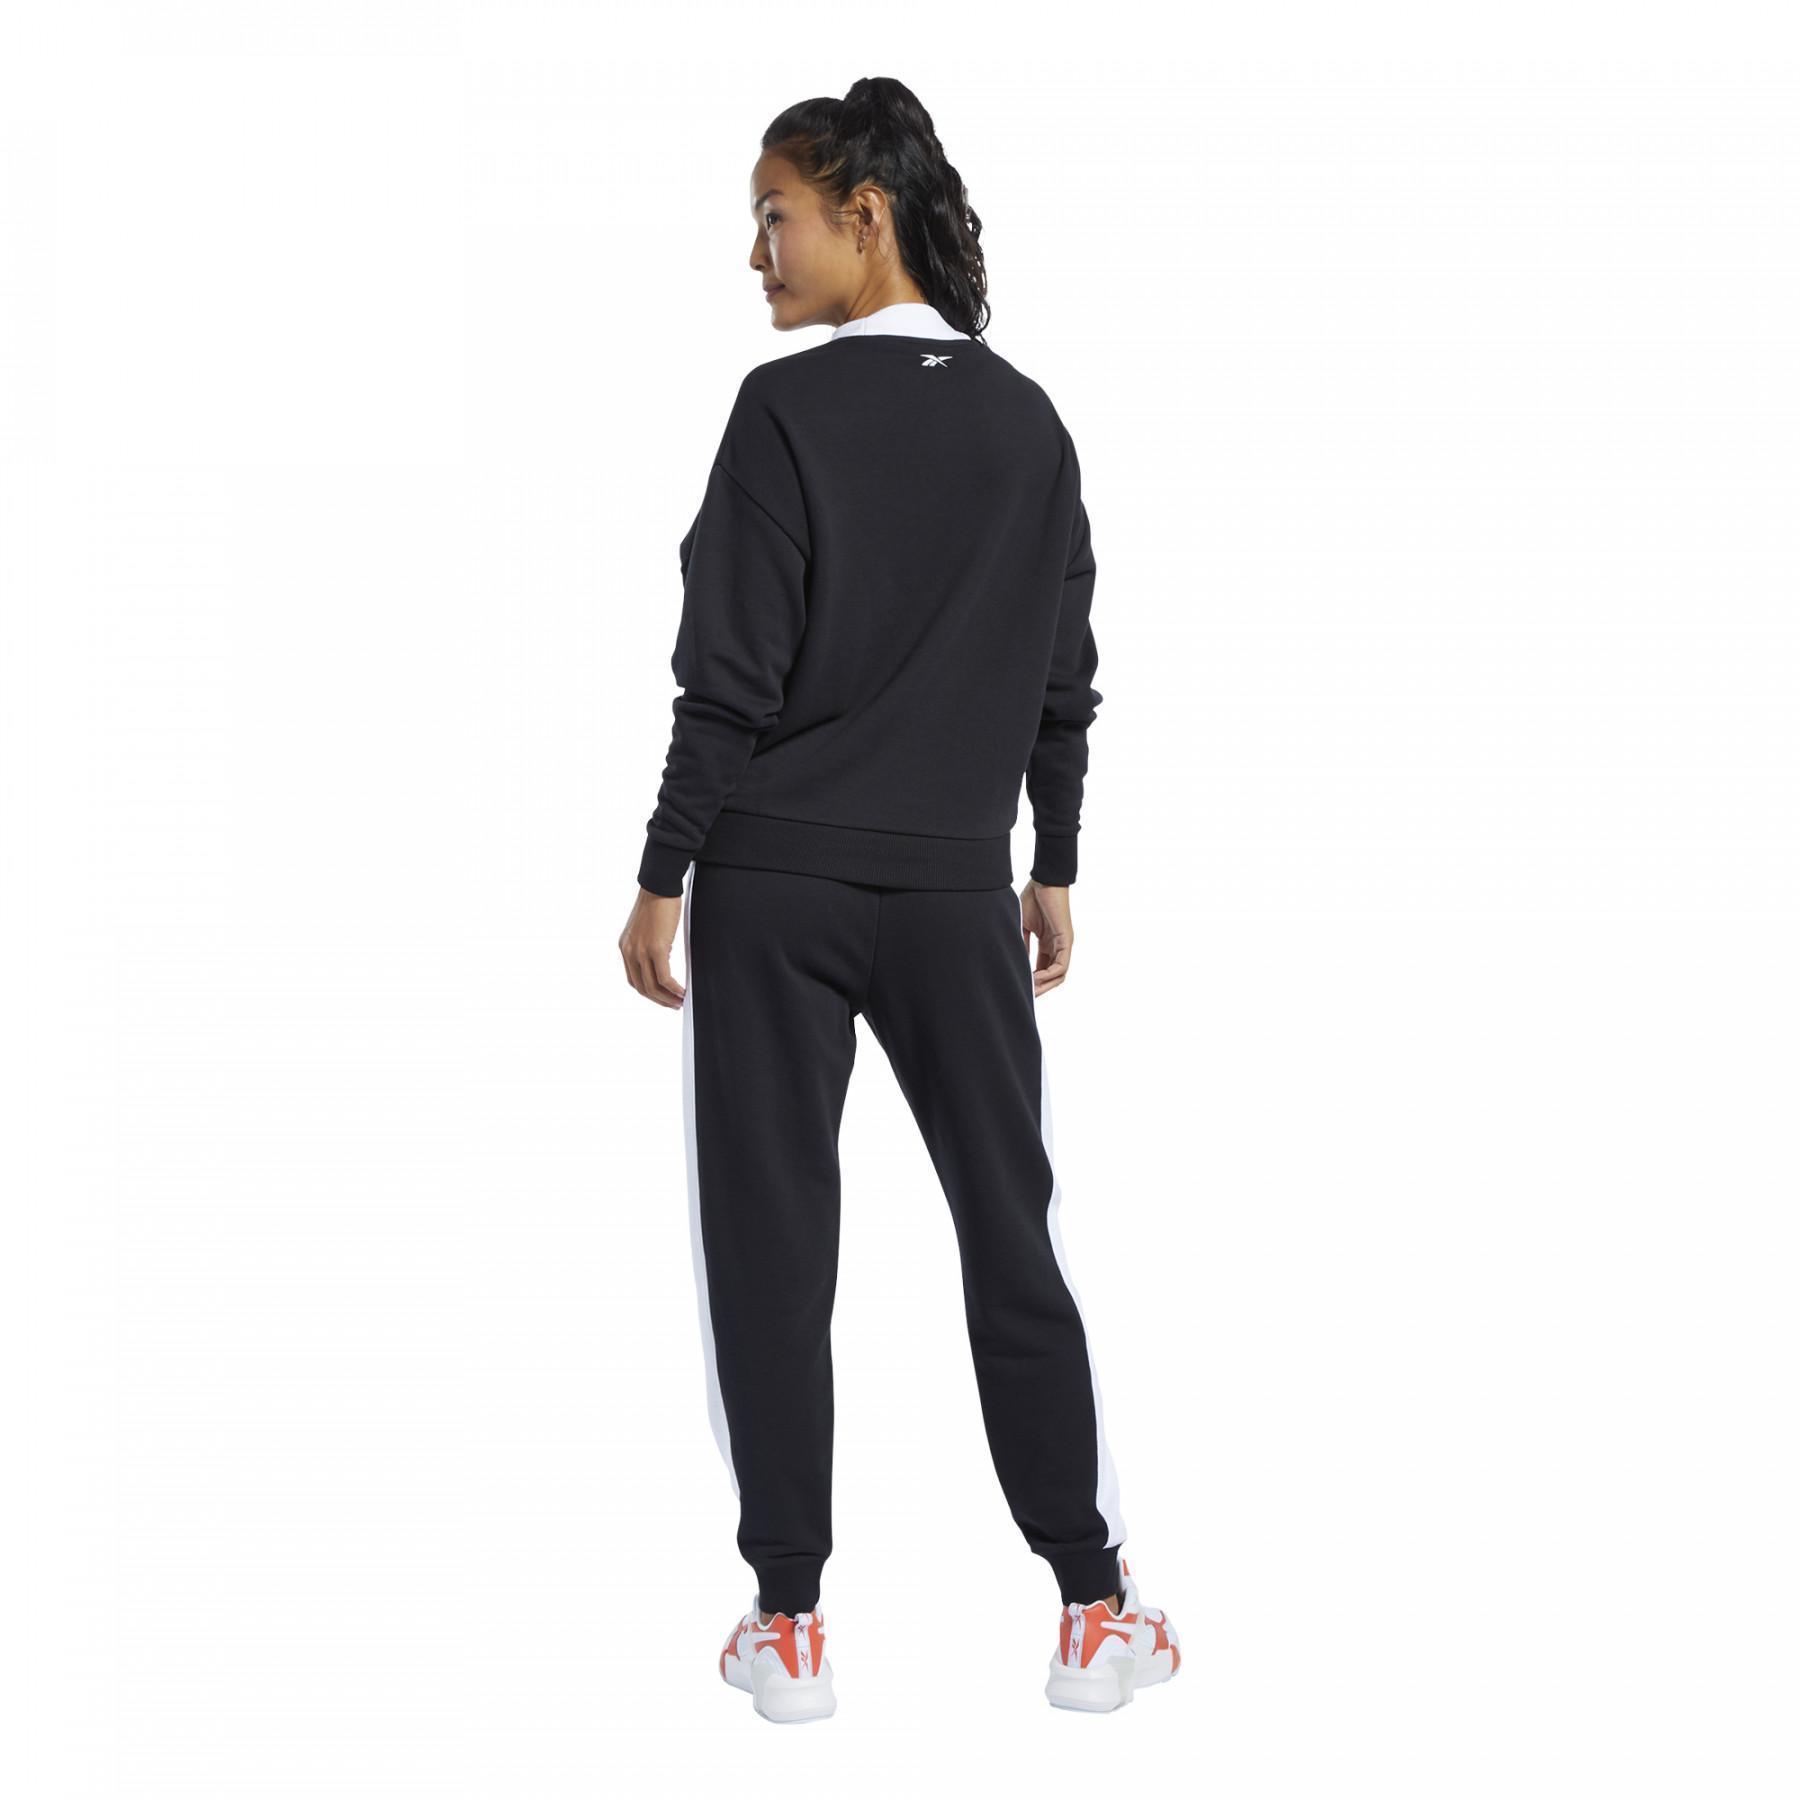 Damen-Trainingsanzug Reebok Essentials Linear Logo